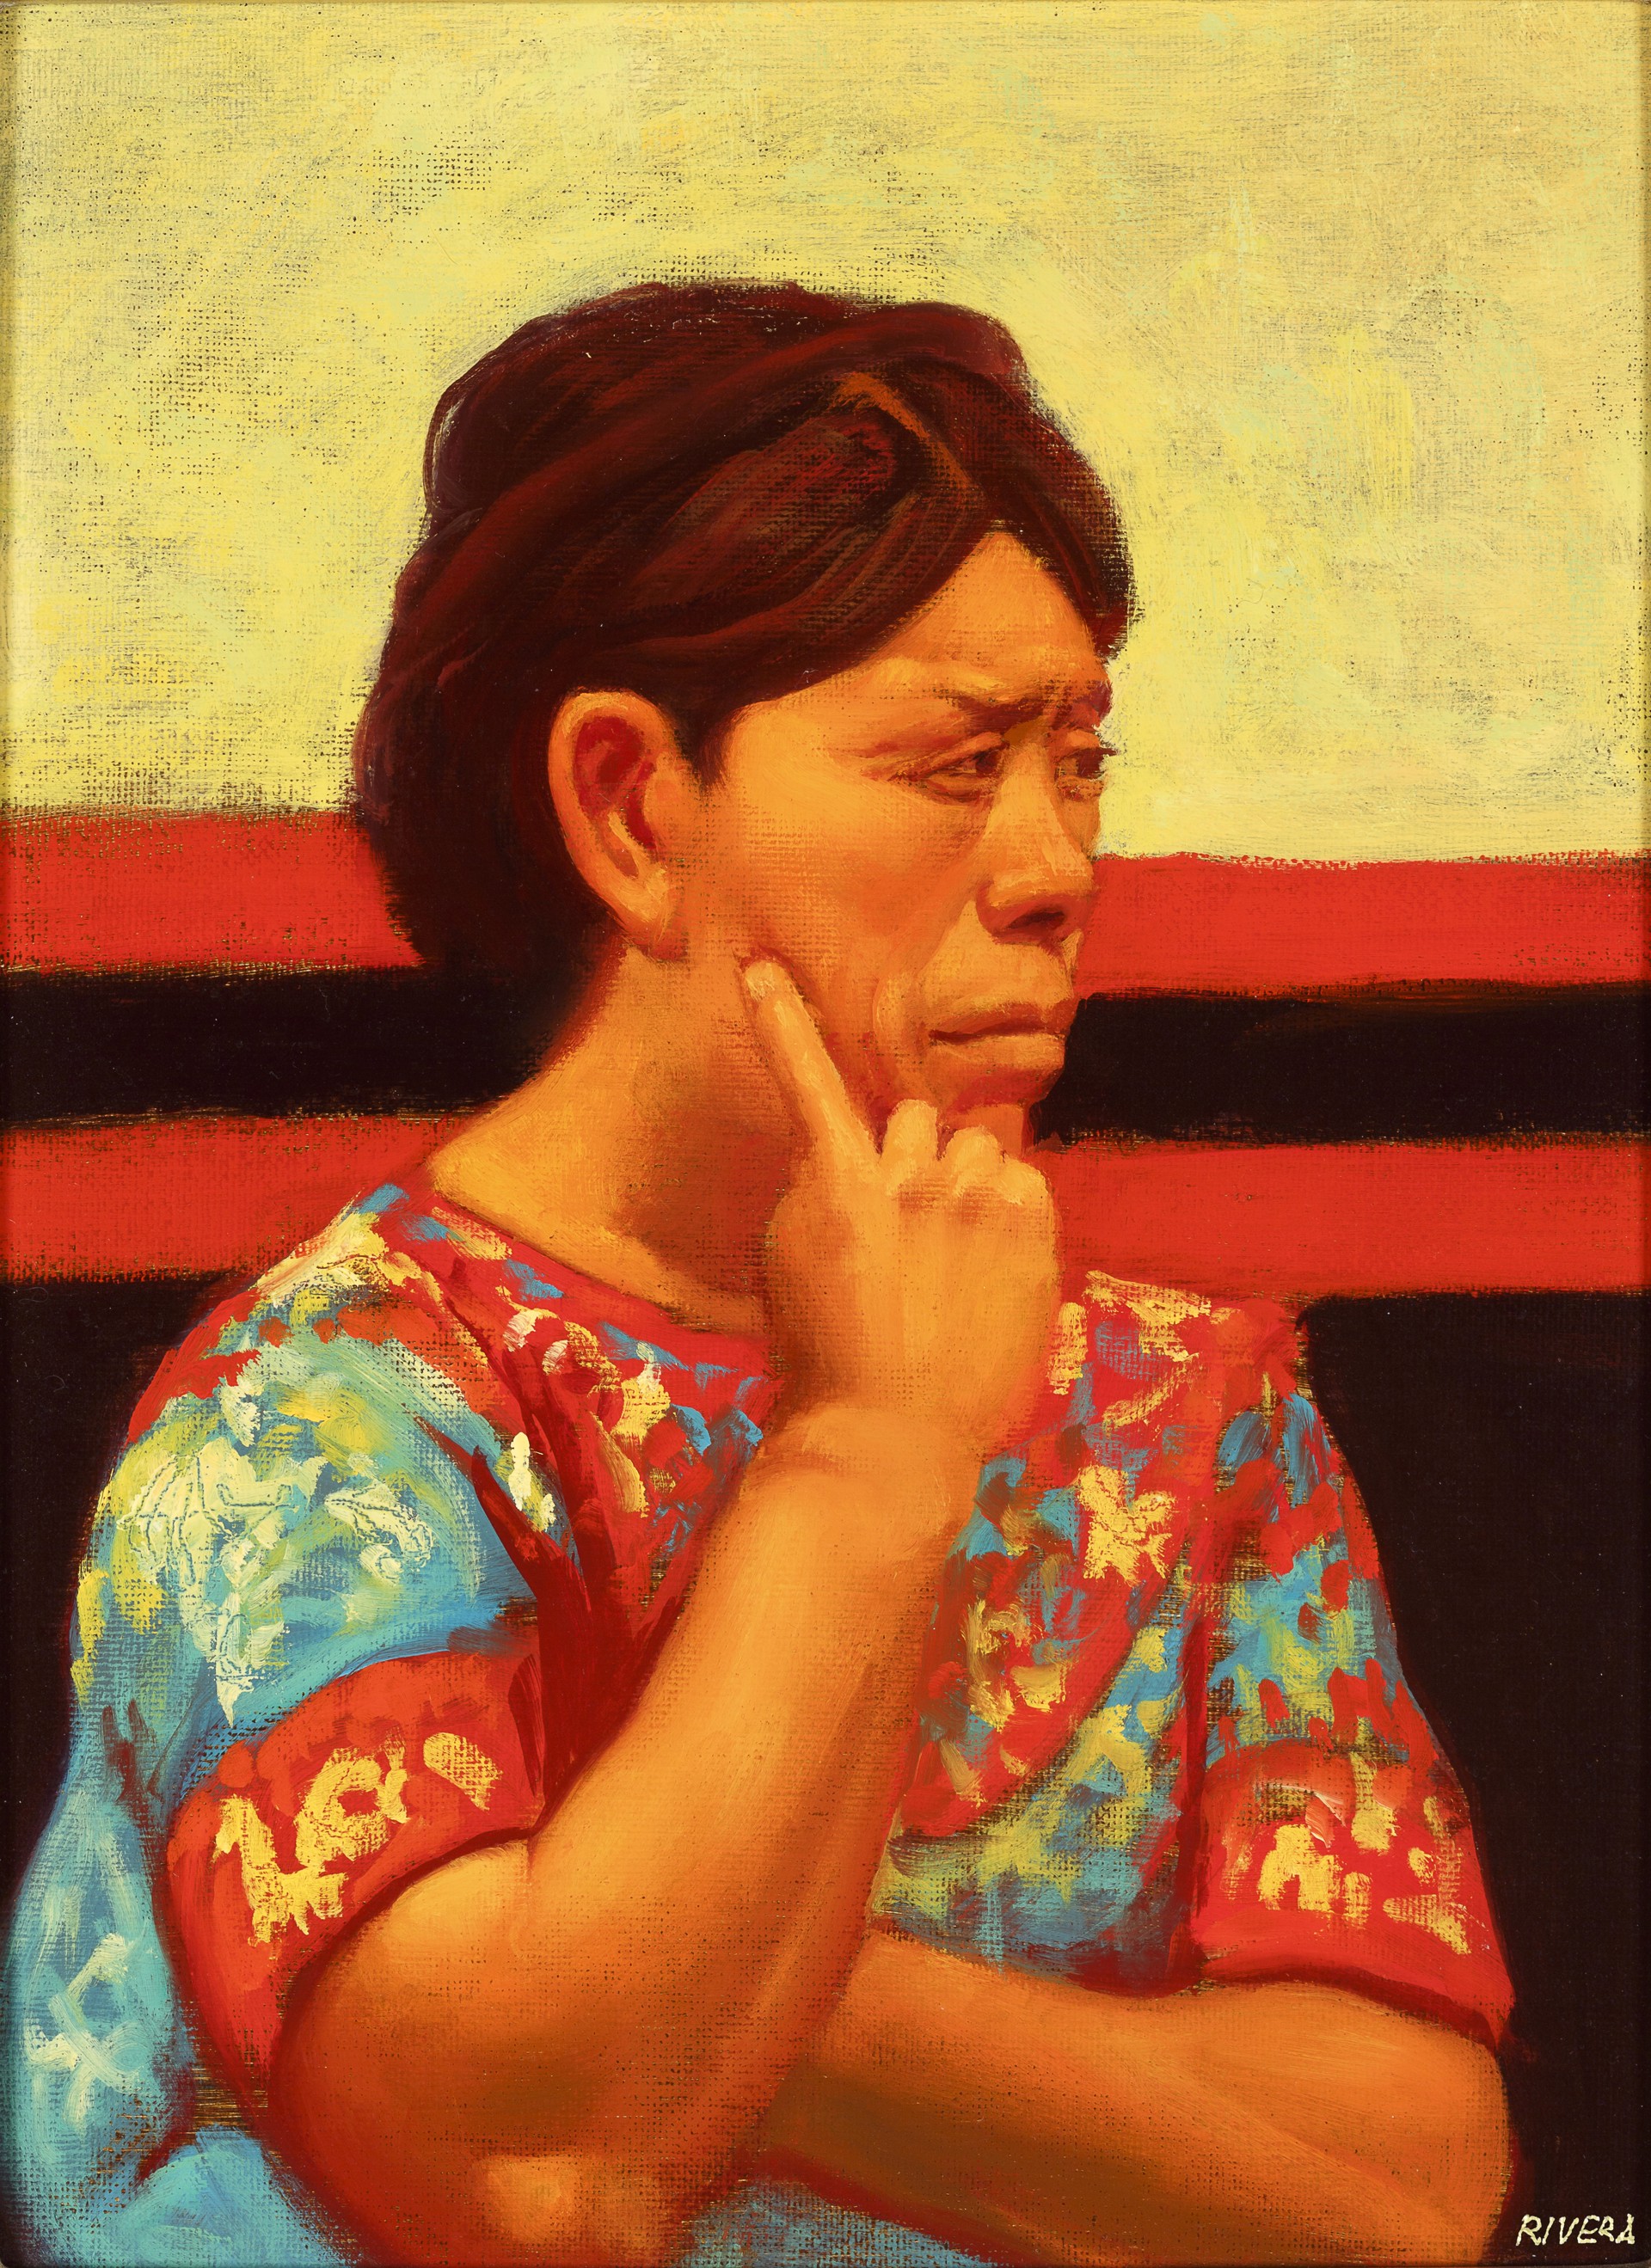 Untitled (Woman Thinking) by Elias Rivera